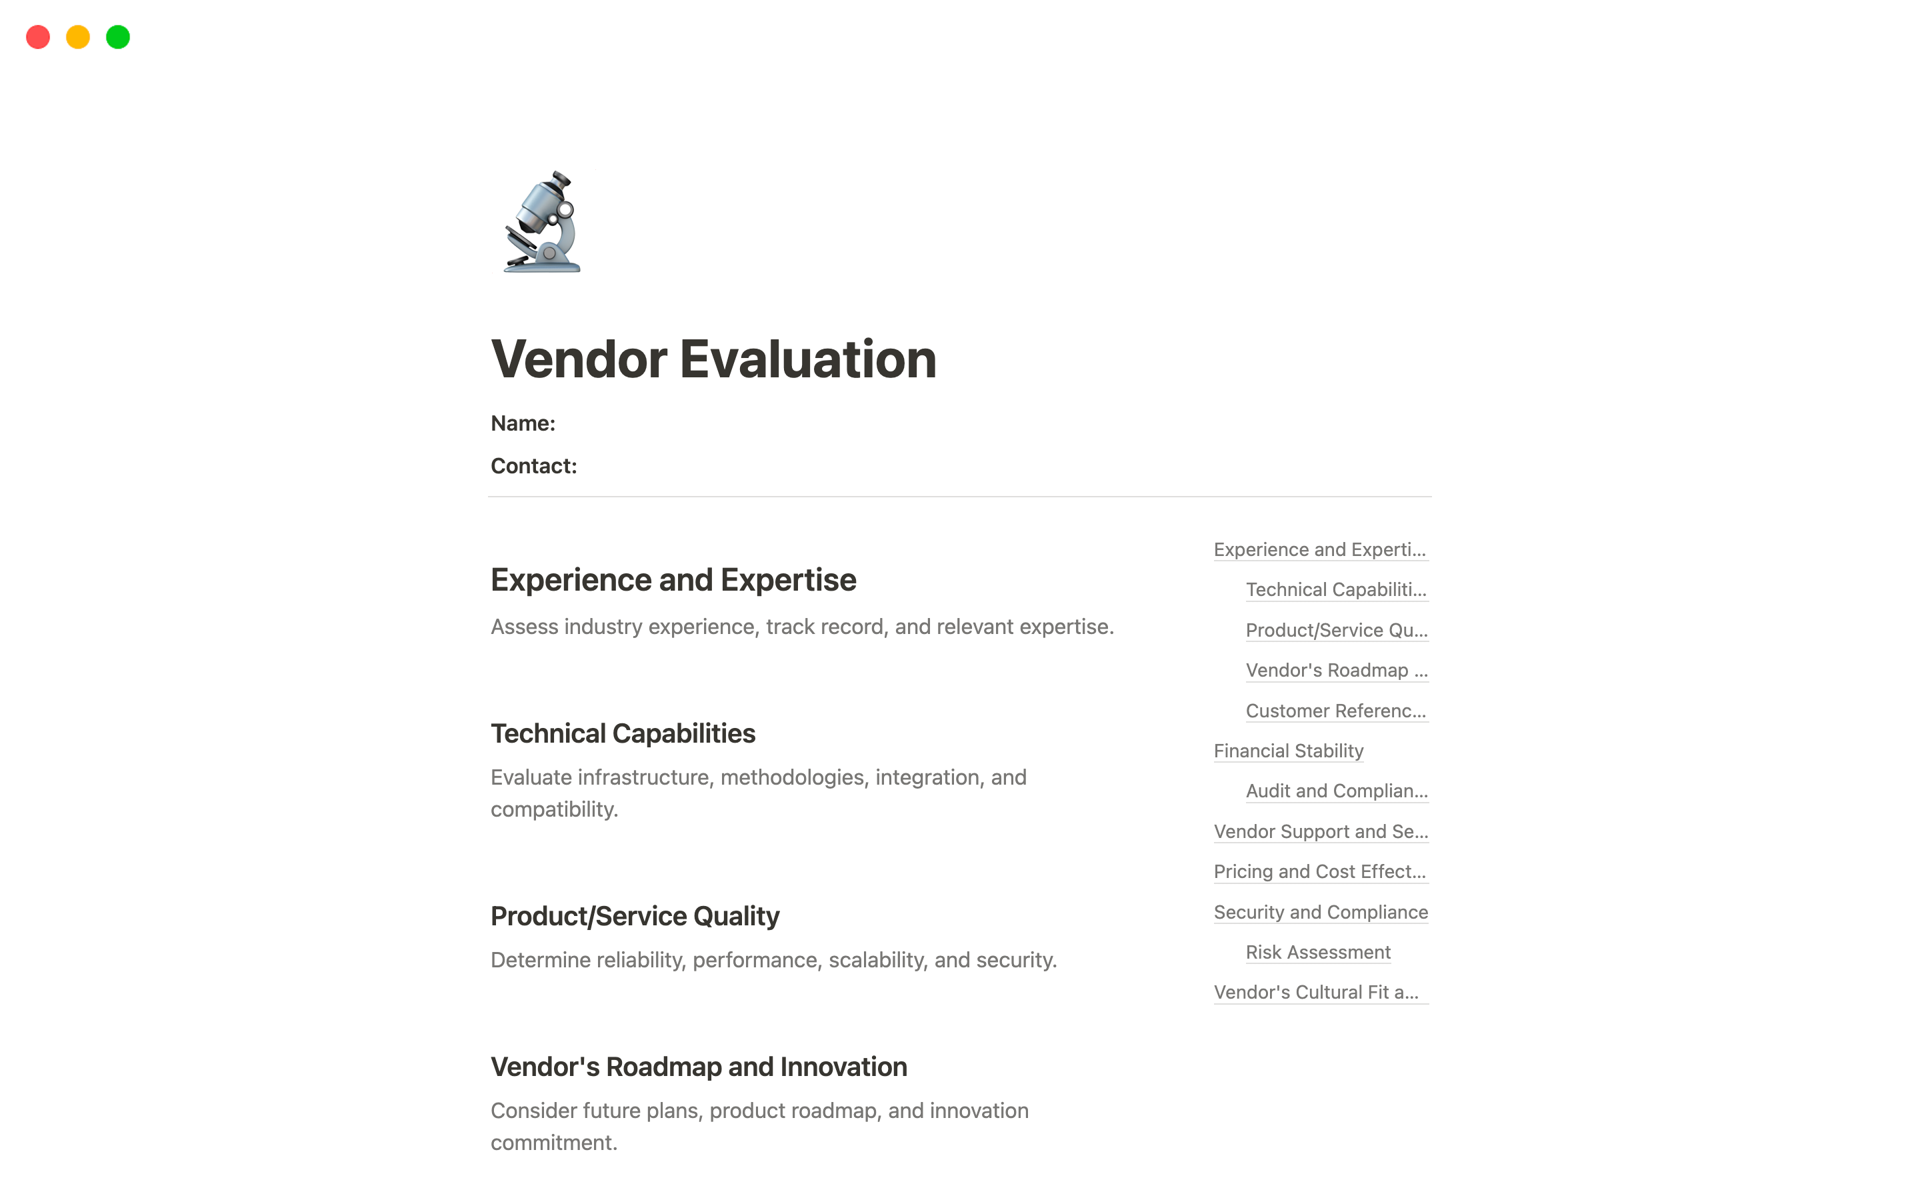 vendor-evaluation-notion-desktop